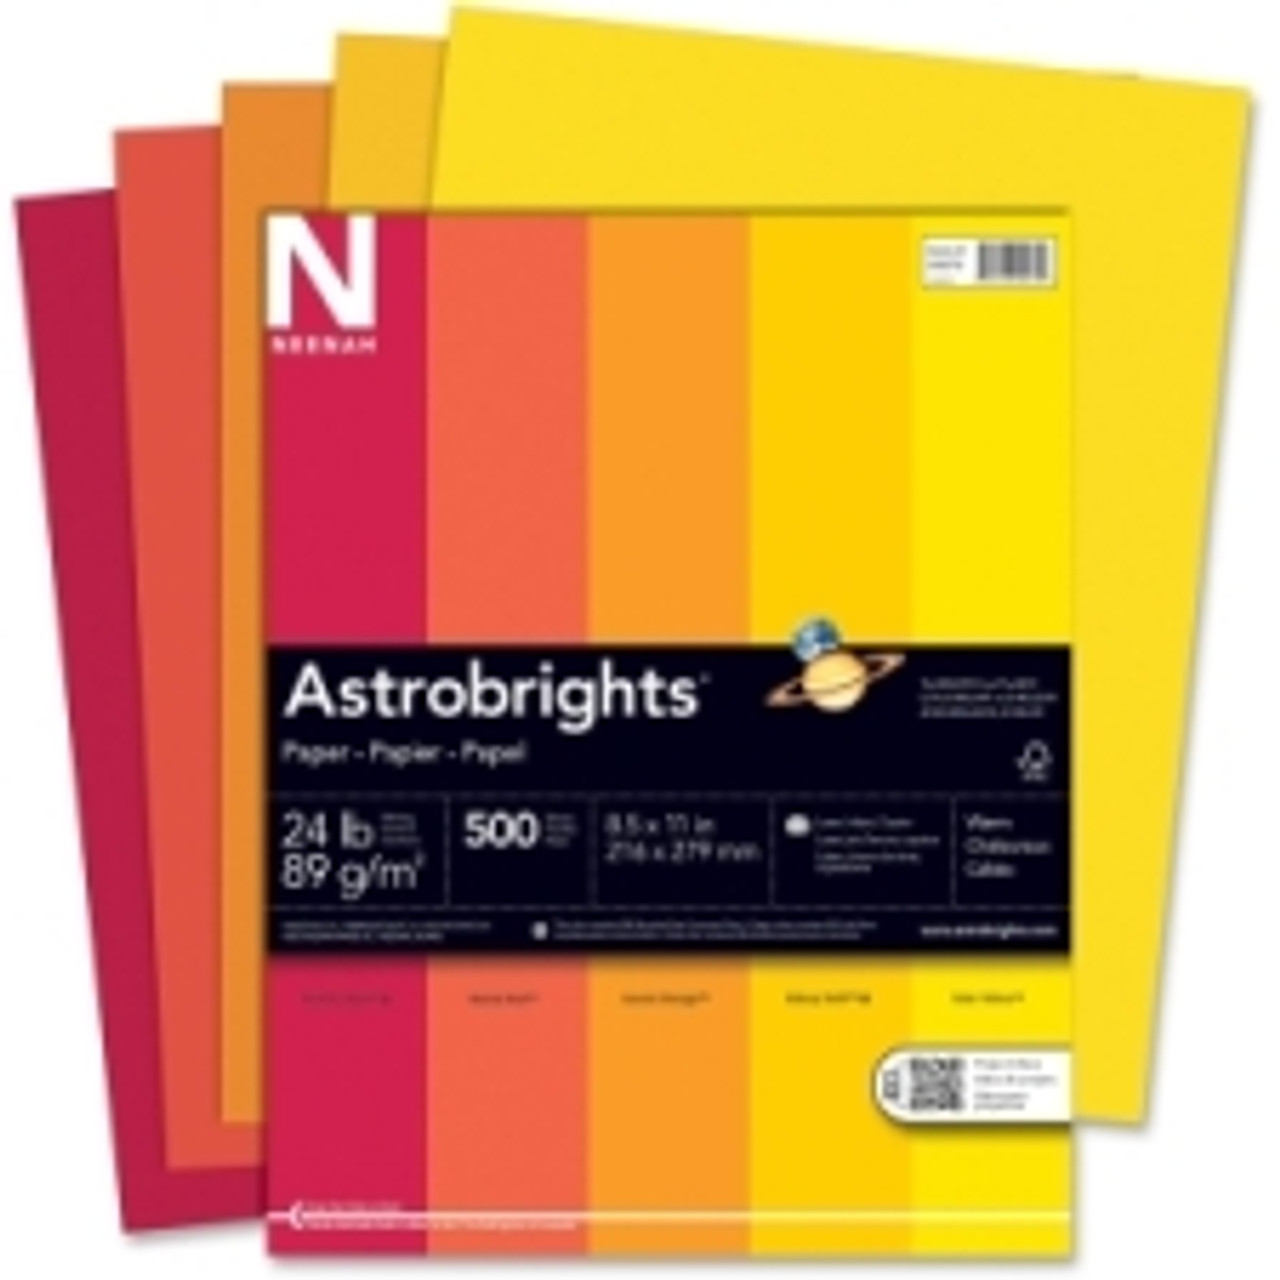 Astrobrights Laser, Inkjet Print Colored Paper, Gold - 500/Ream